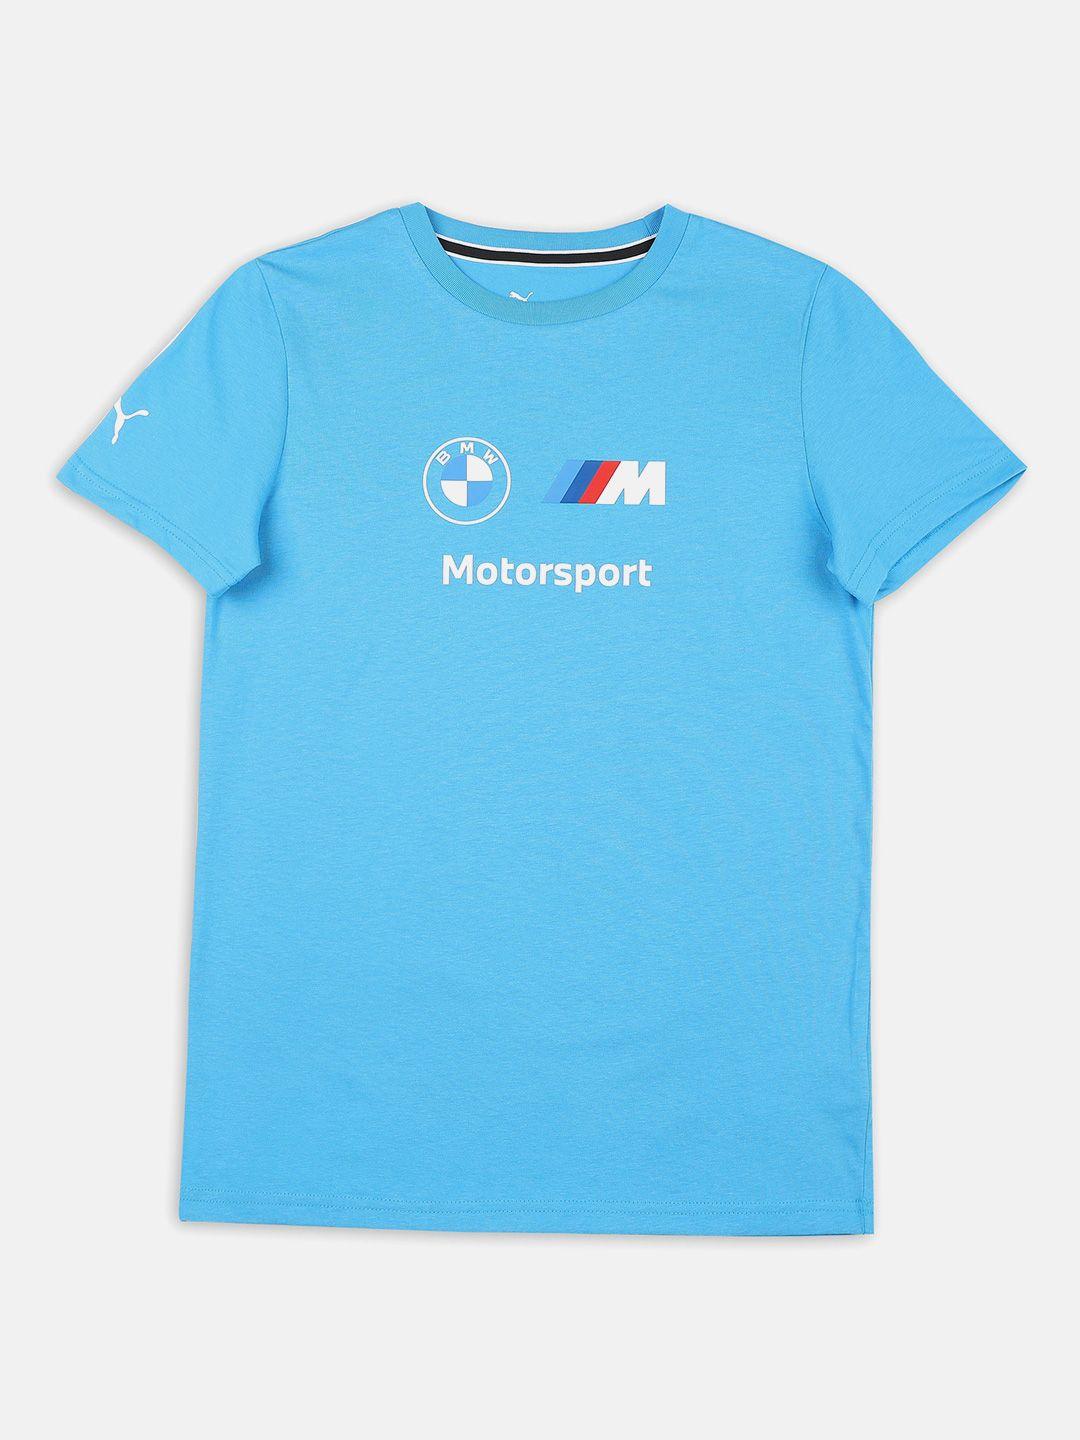 puma motorsport typography printed t-shirt